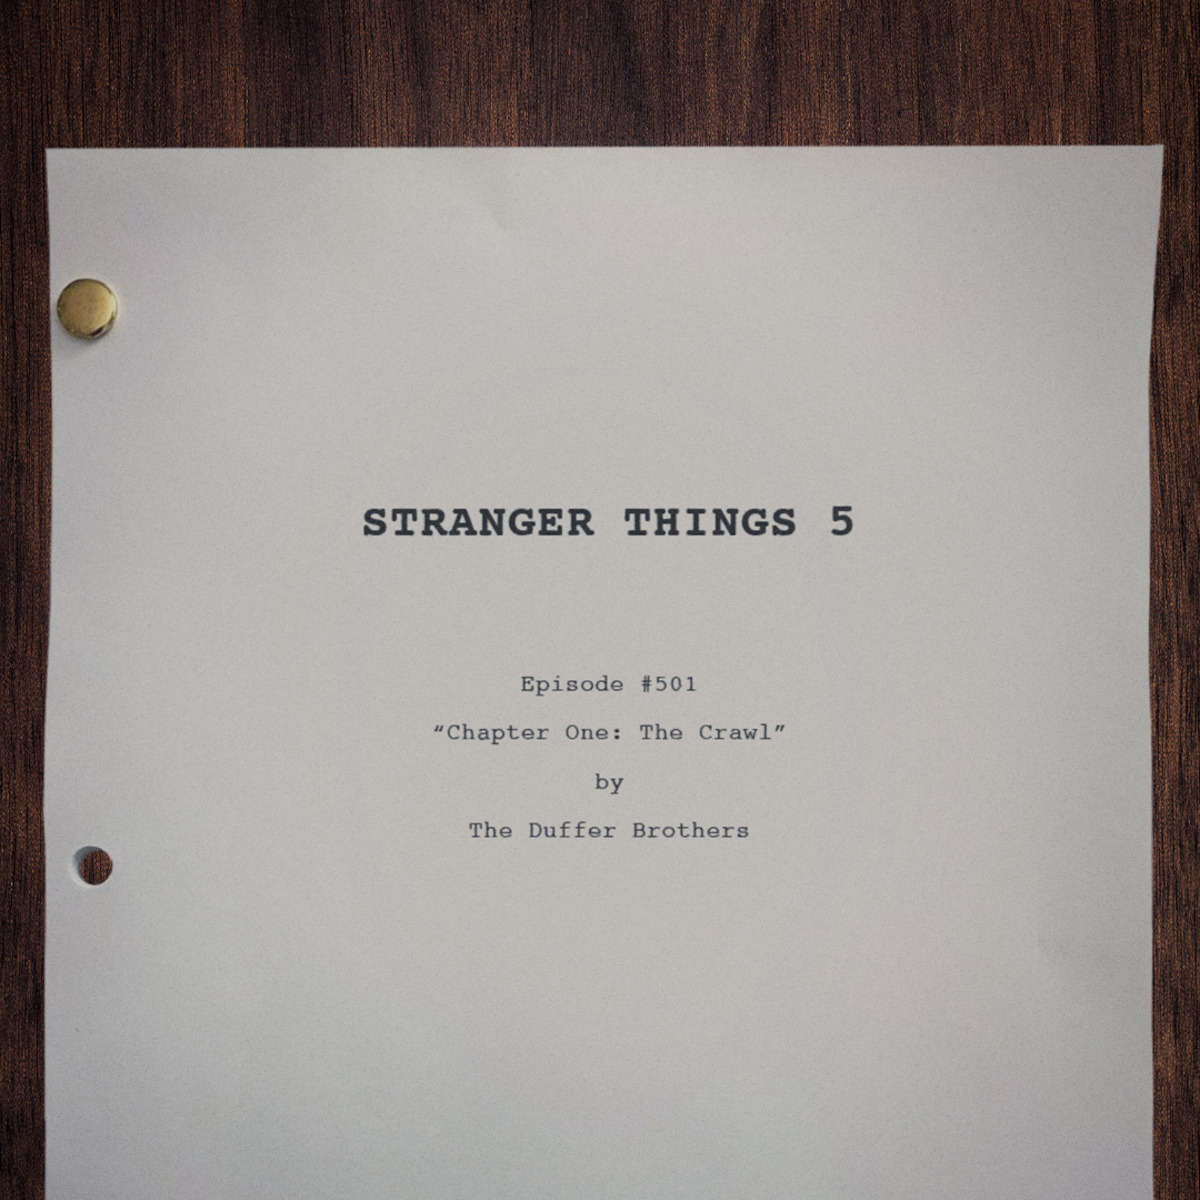 Stranger Things Season 5 Episode 1 Title and First Few Lines Revealed -  Netflix Tudum